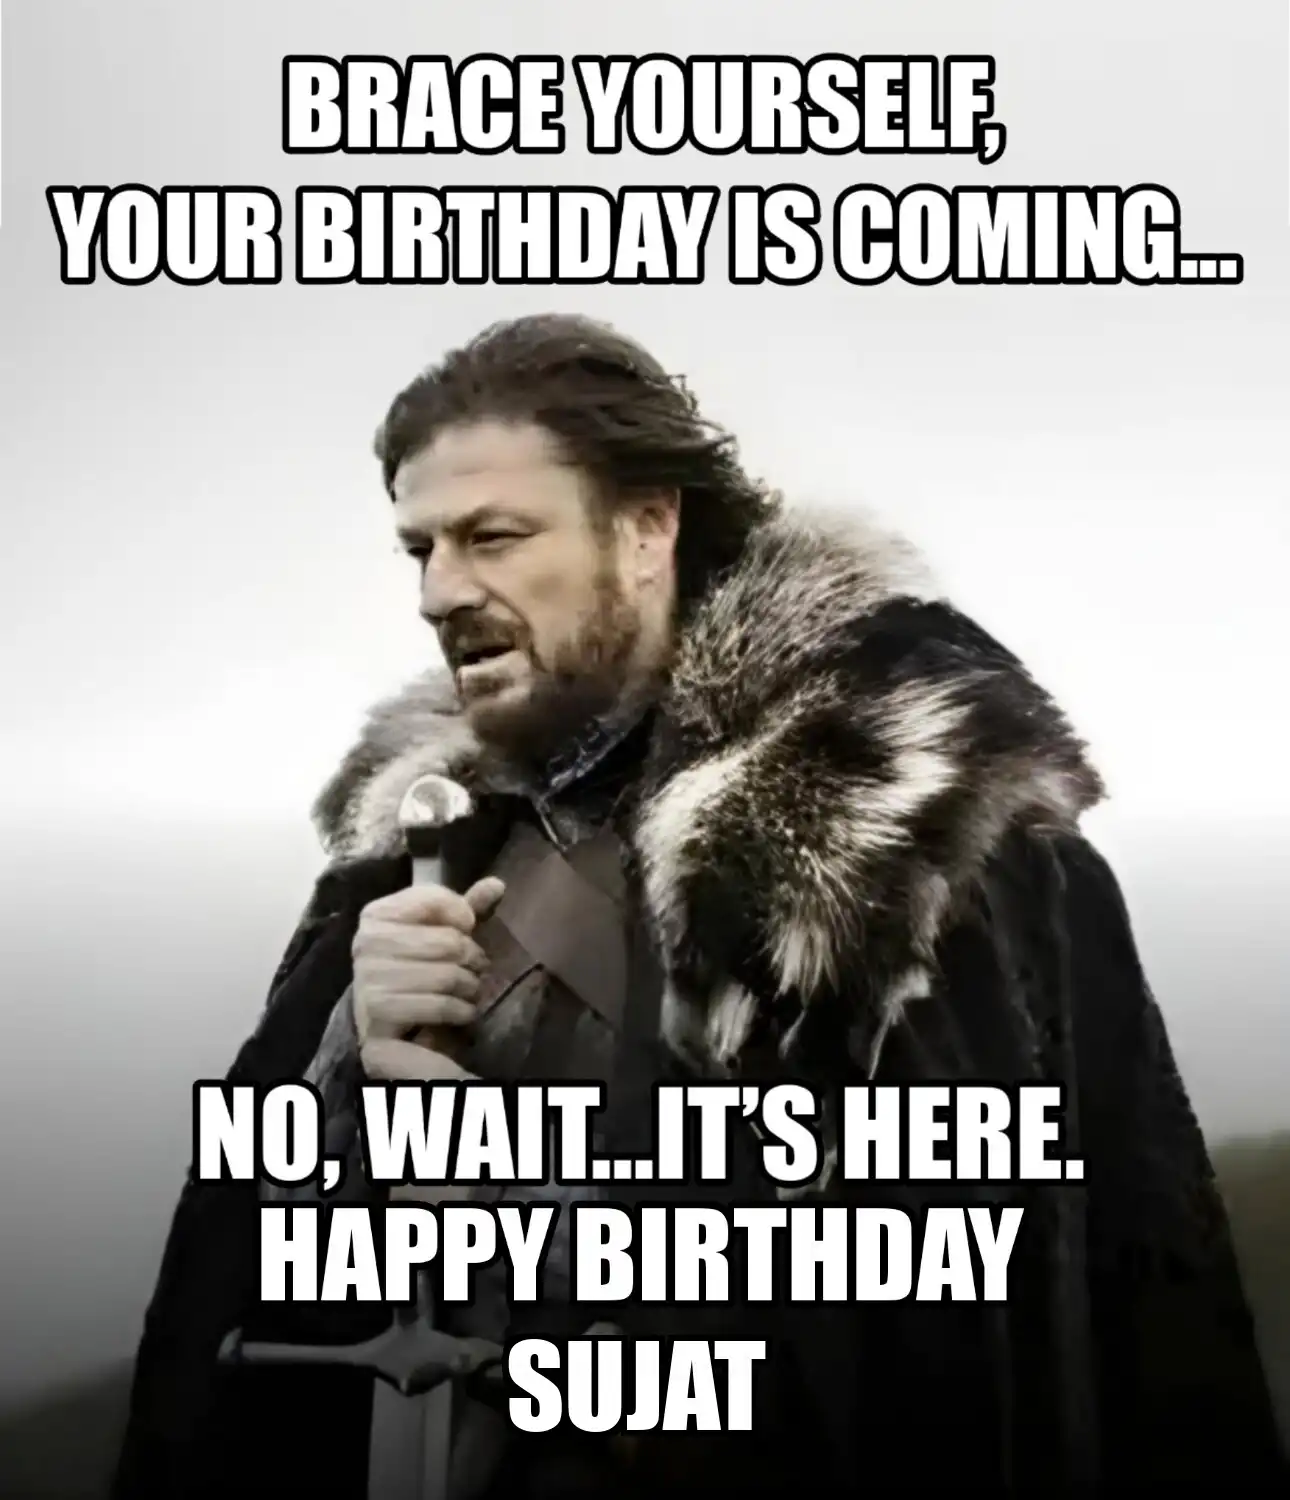 Happy Birthday Sujat Brace Yourself Your Birthday Is Coming Meme